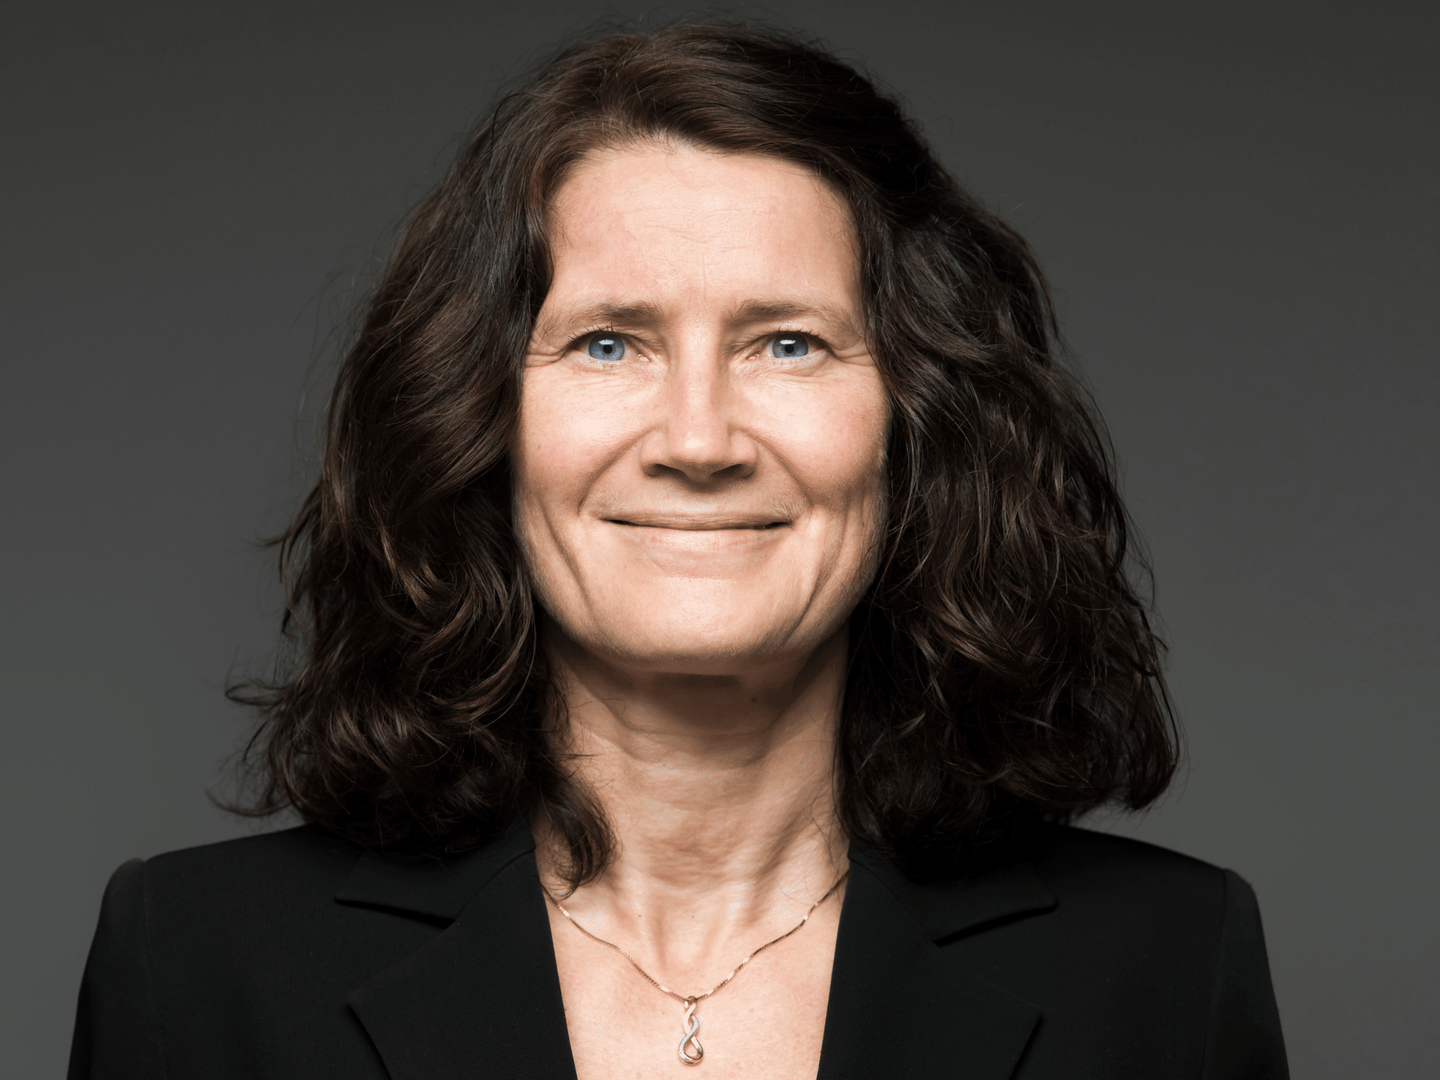 Hilde Nødseth, CEO of Borea Asset Management. | Photo: Borea Asset Management